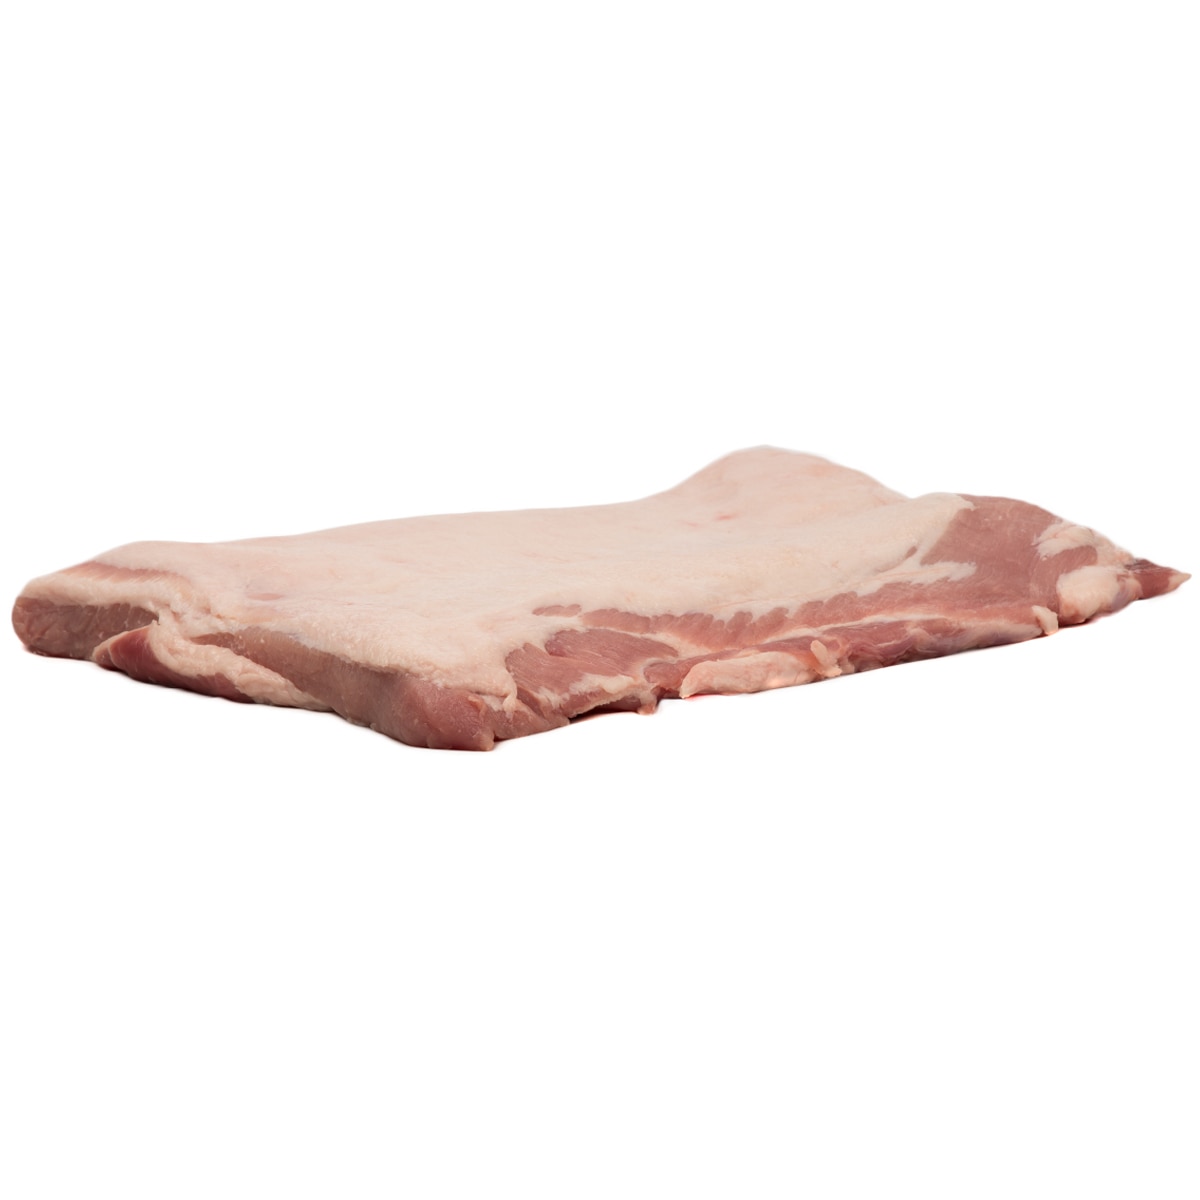 Australian Pork Belly Whole Boneless + Rindless